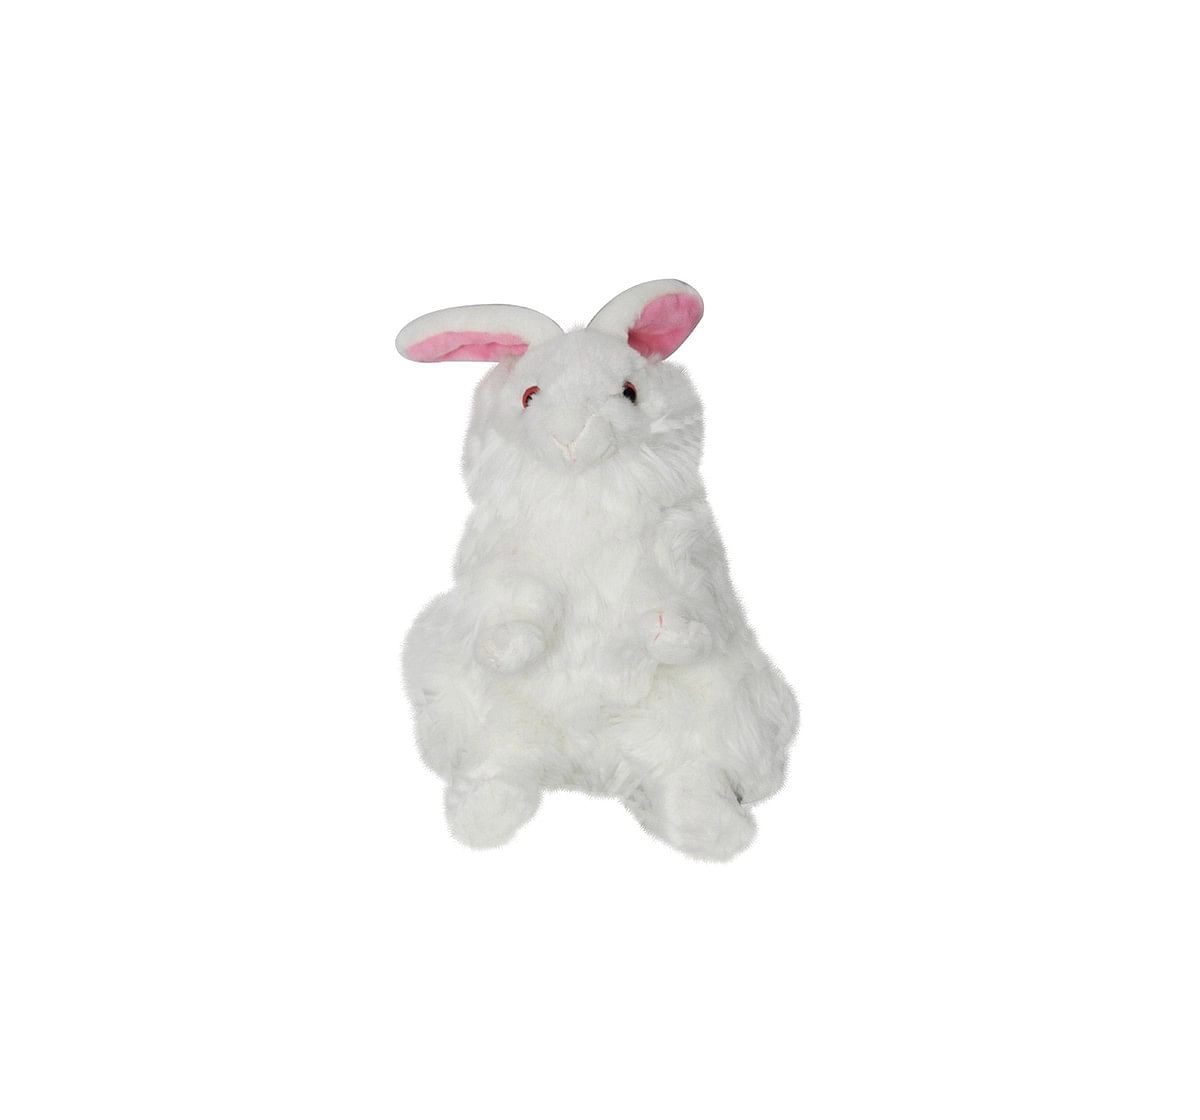 Soft Buddies Premium White Rabbit Quirky Soft Toys for Kids age 12M+ - 30.48 Cm 